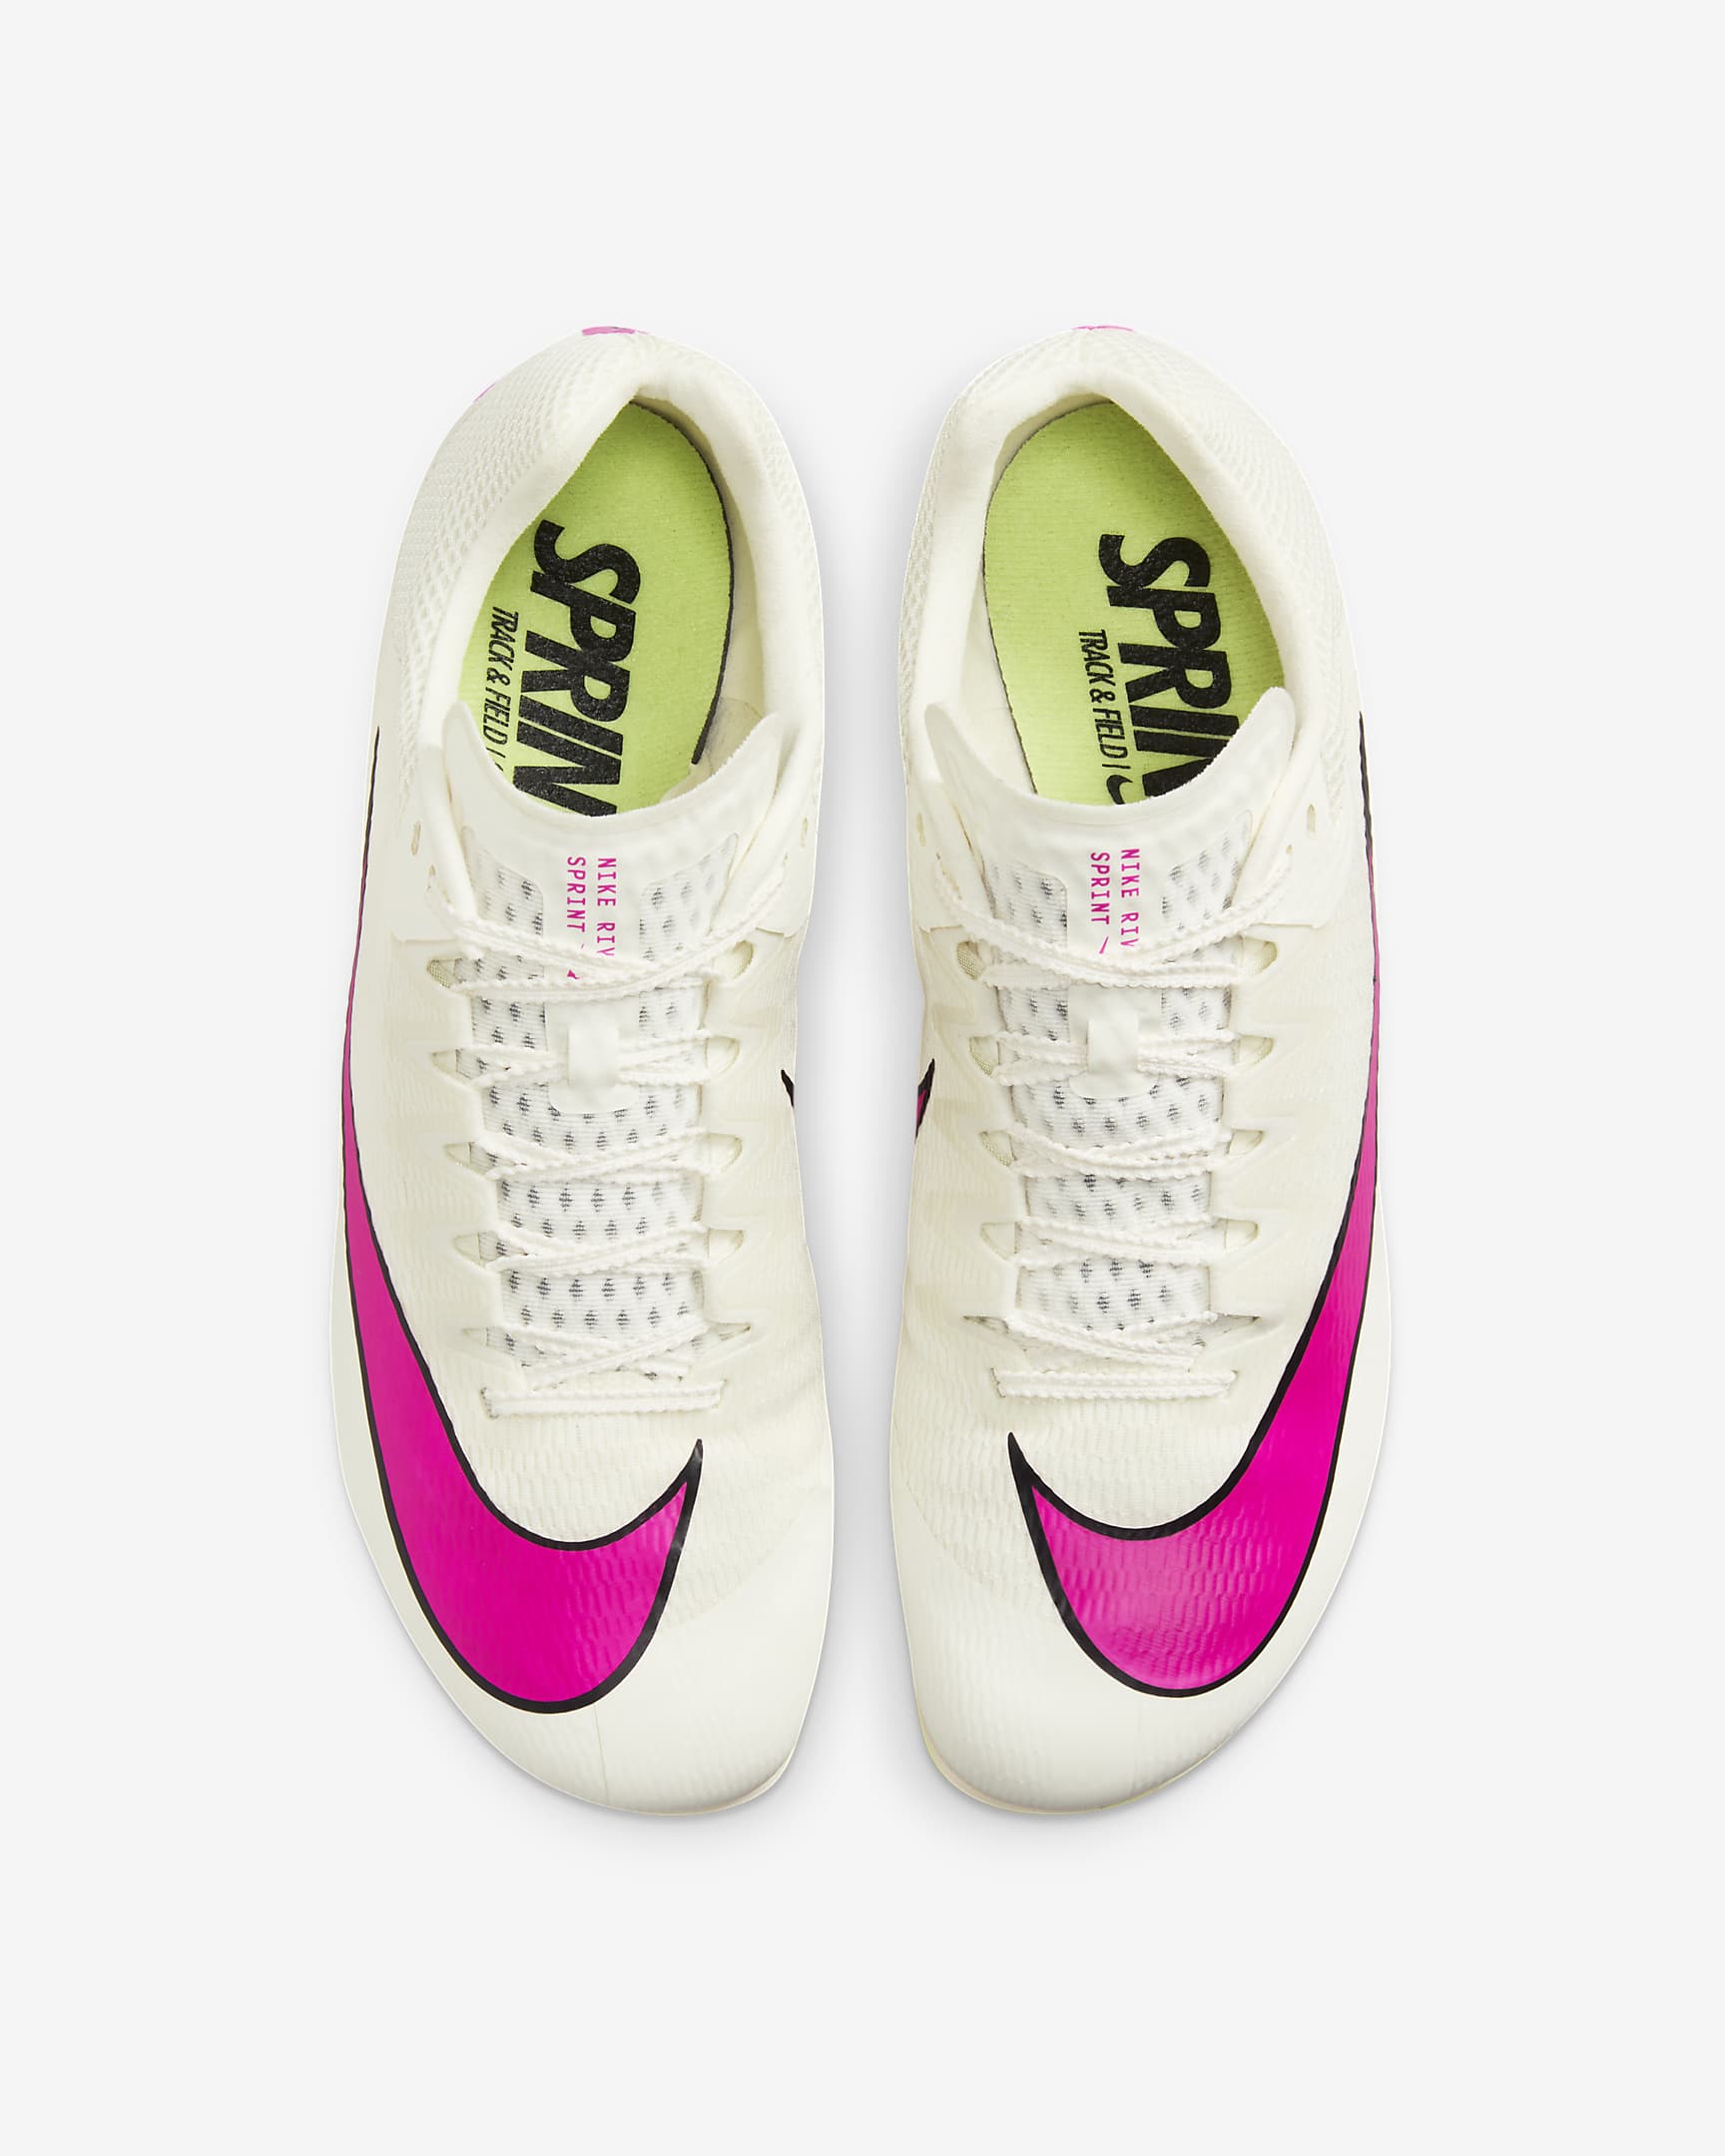 Nike Rival Sprint Athletics Sprinting Spikes - Sail/Light Lemon Twist/Guava Ice/Fierce Pink